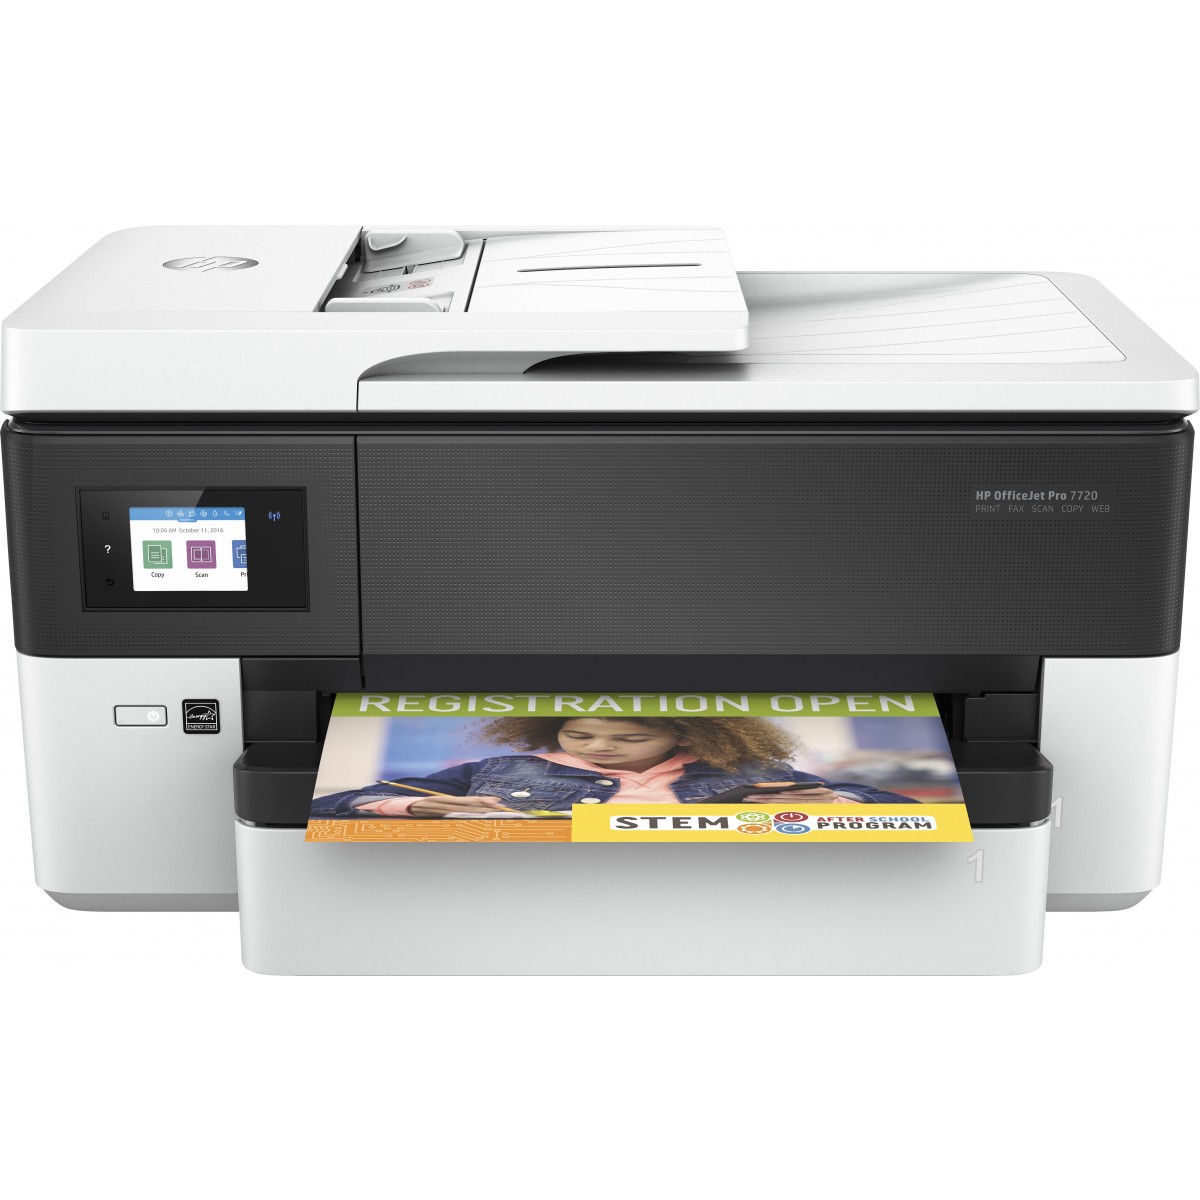 HP OfficeJet Pro 7720 - Thermal inkjet - Colour printing - 4800 x 1200 DPI - A3 - Direct printing - Black - White